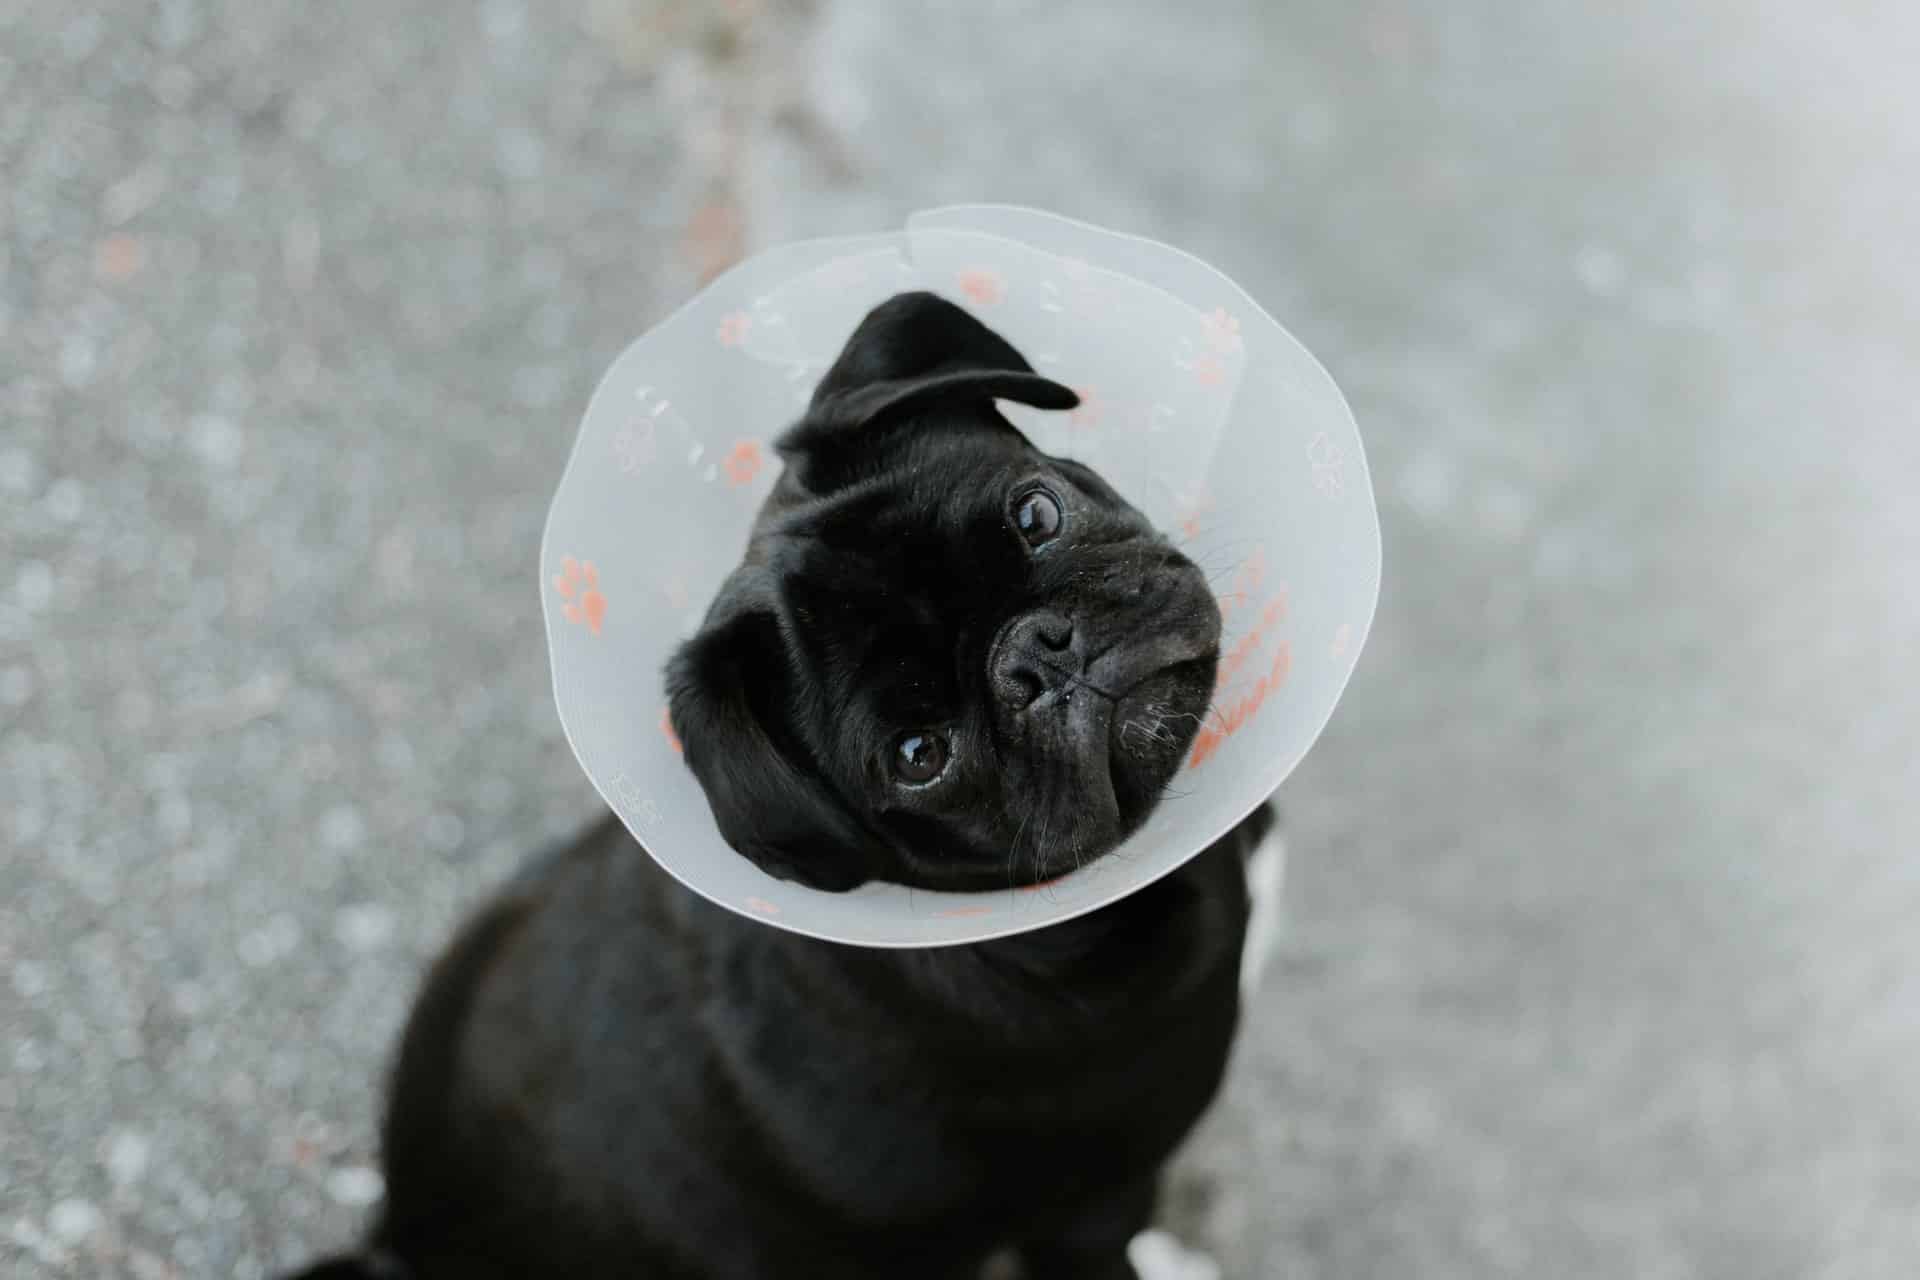 A pug with a medical collar on